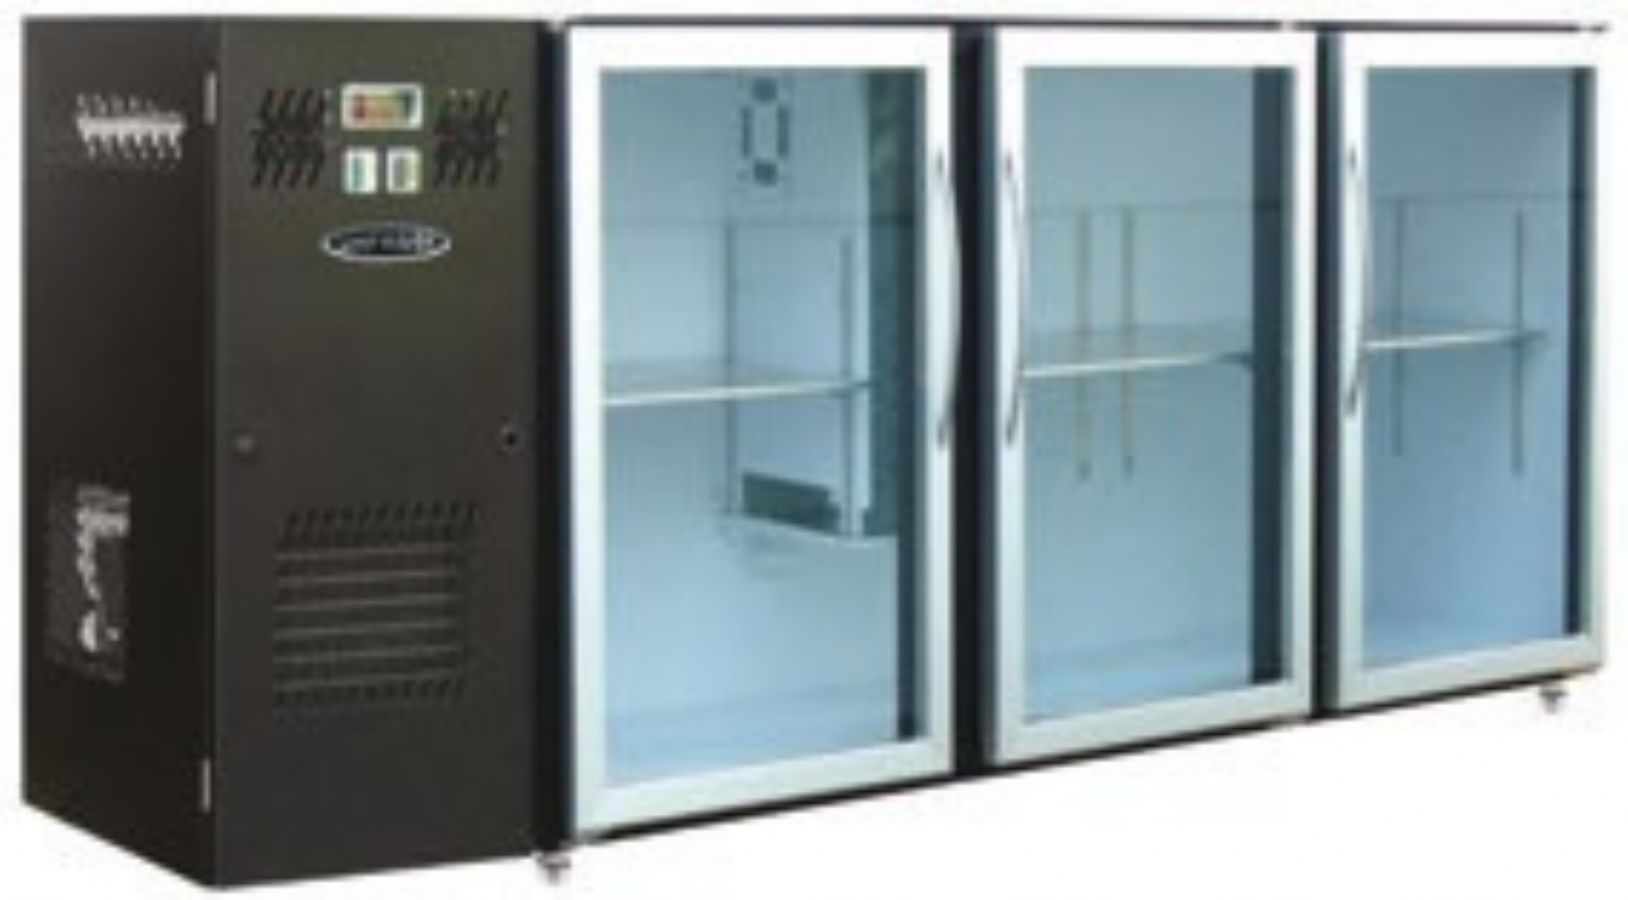 Arrire-bar Skinplate - Srie LEDS - Groupe log - 3 petites portes vitres - 390 litres - U53PVS